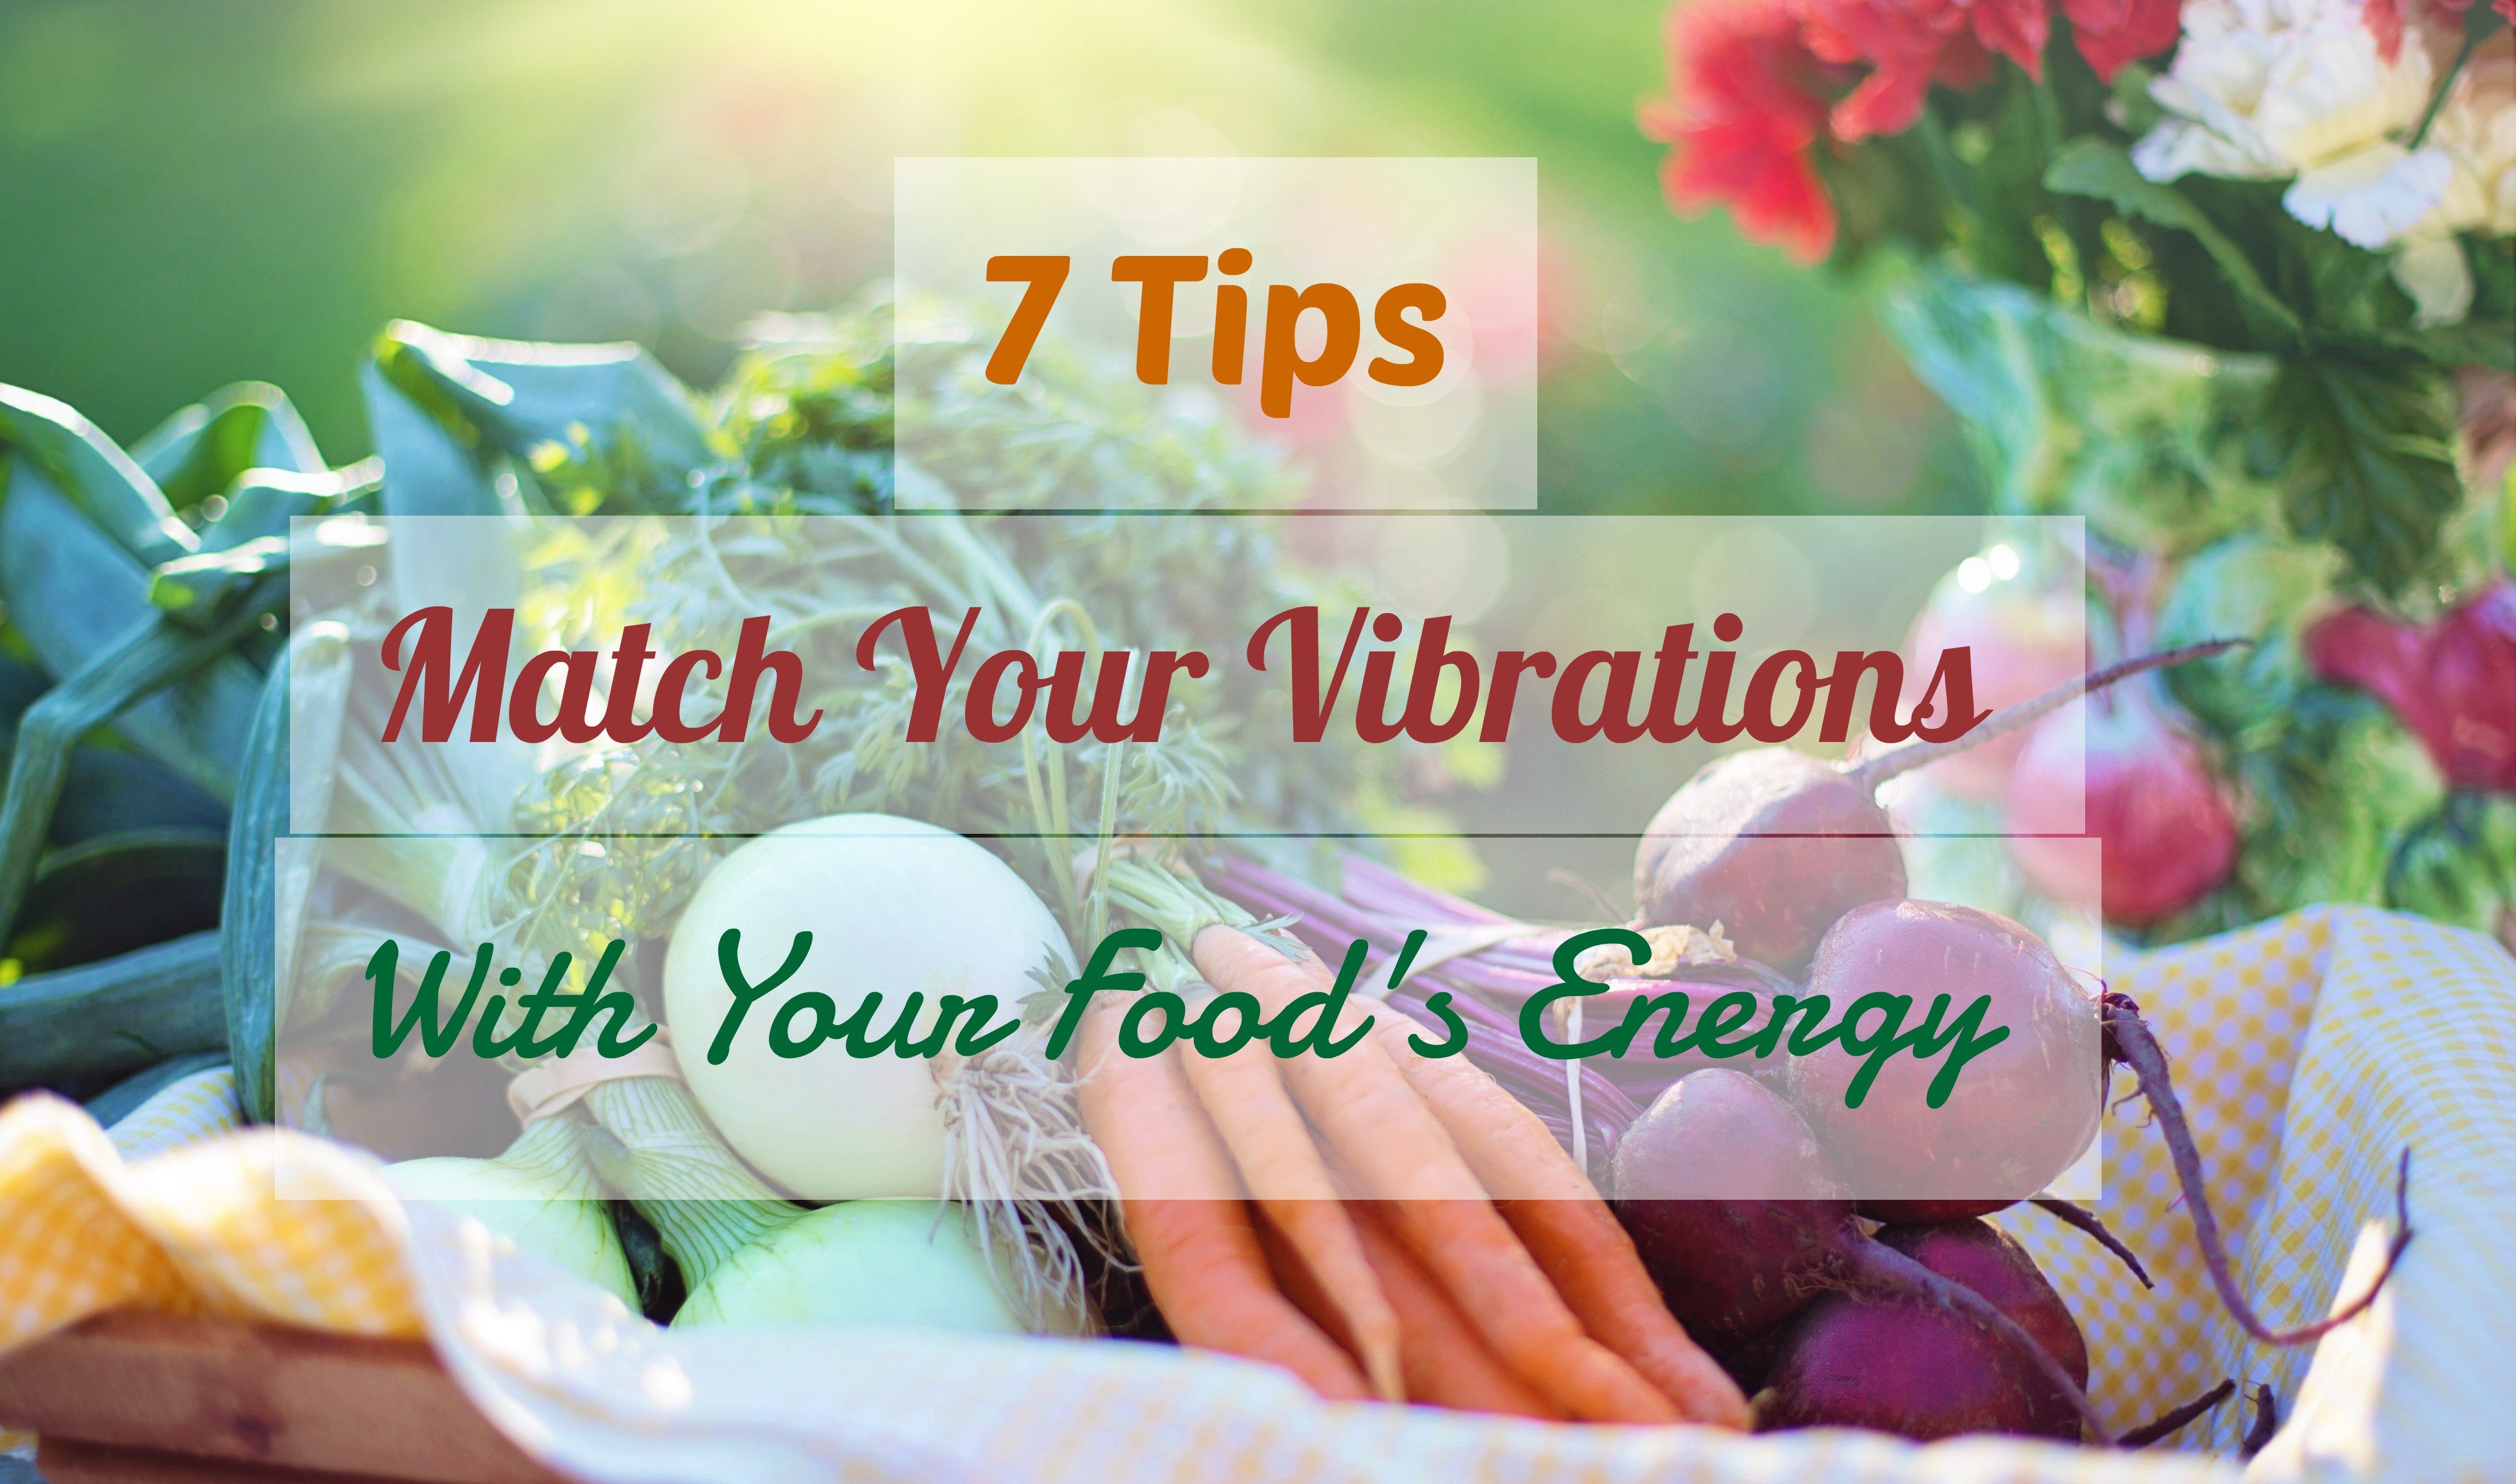 Vibrational food